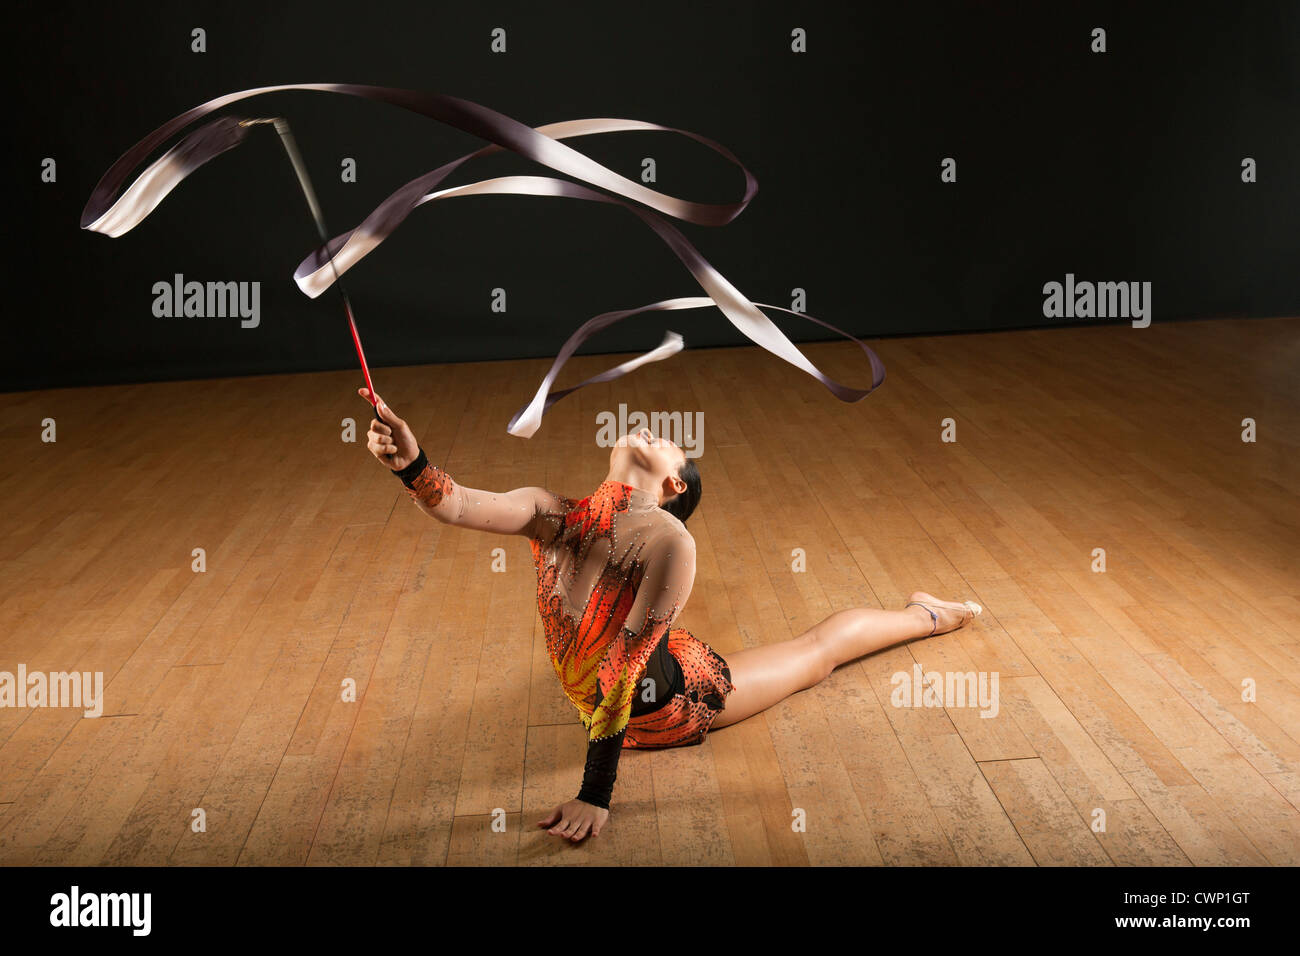 Gymnast bending backwards on floor, twirling ribbon Stock Photo